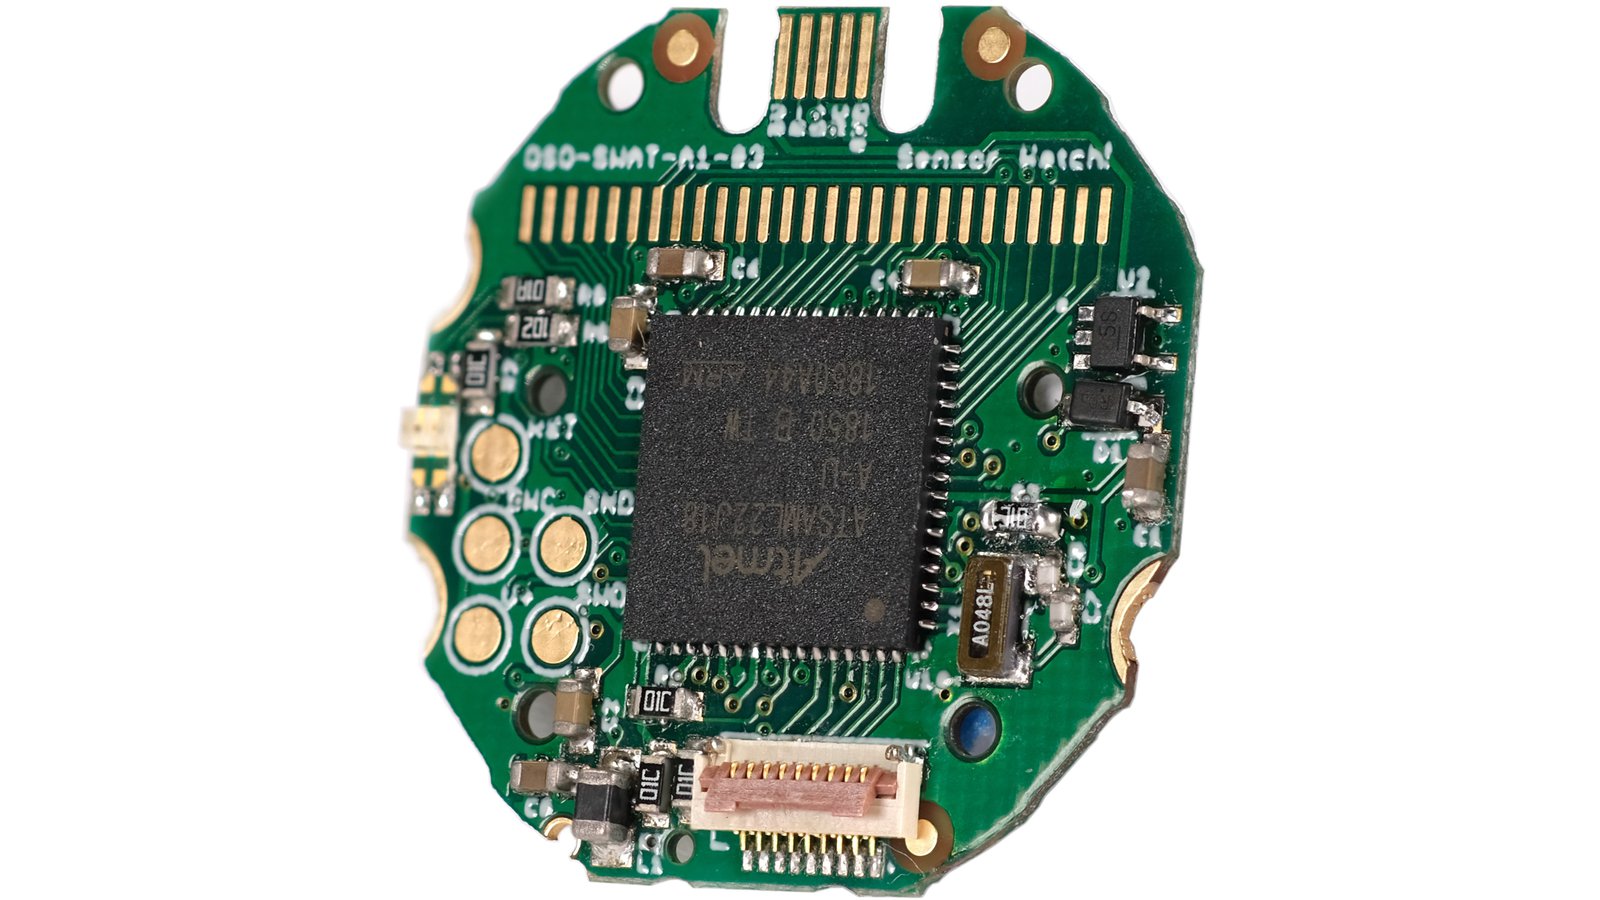 Photo: the Sensor Watch circuit board